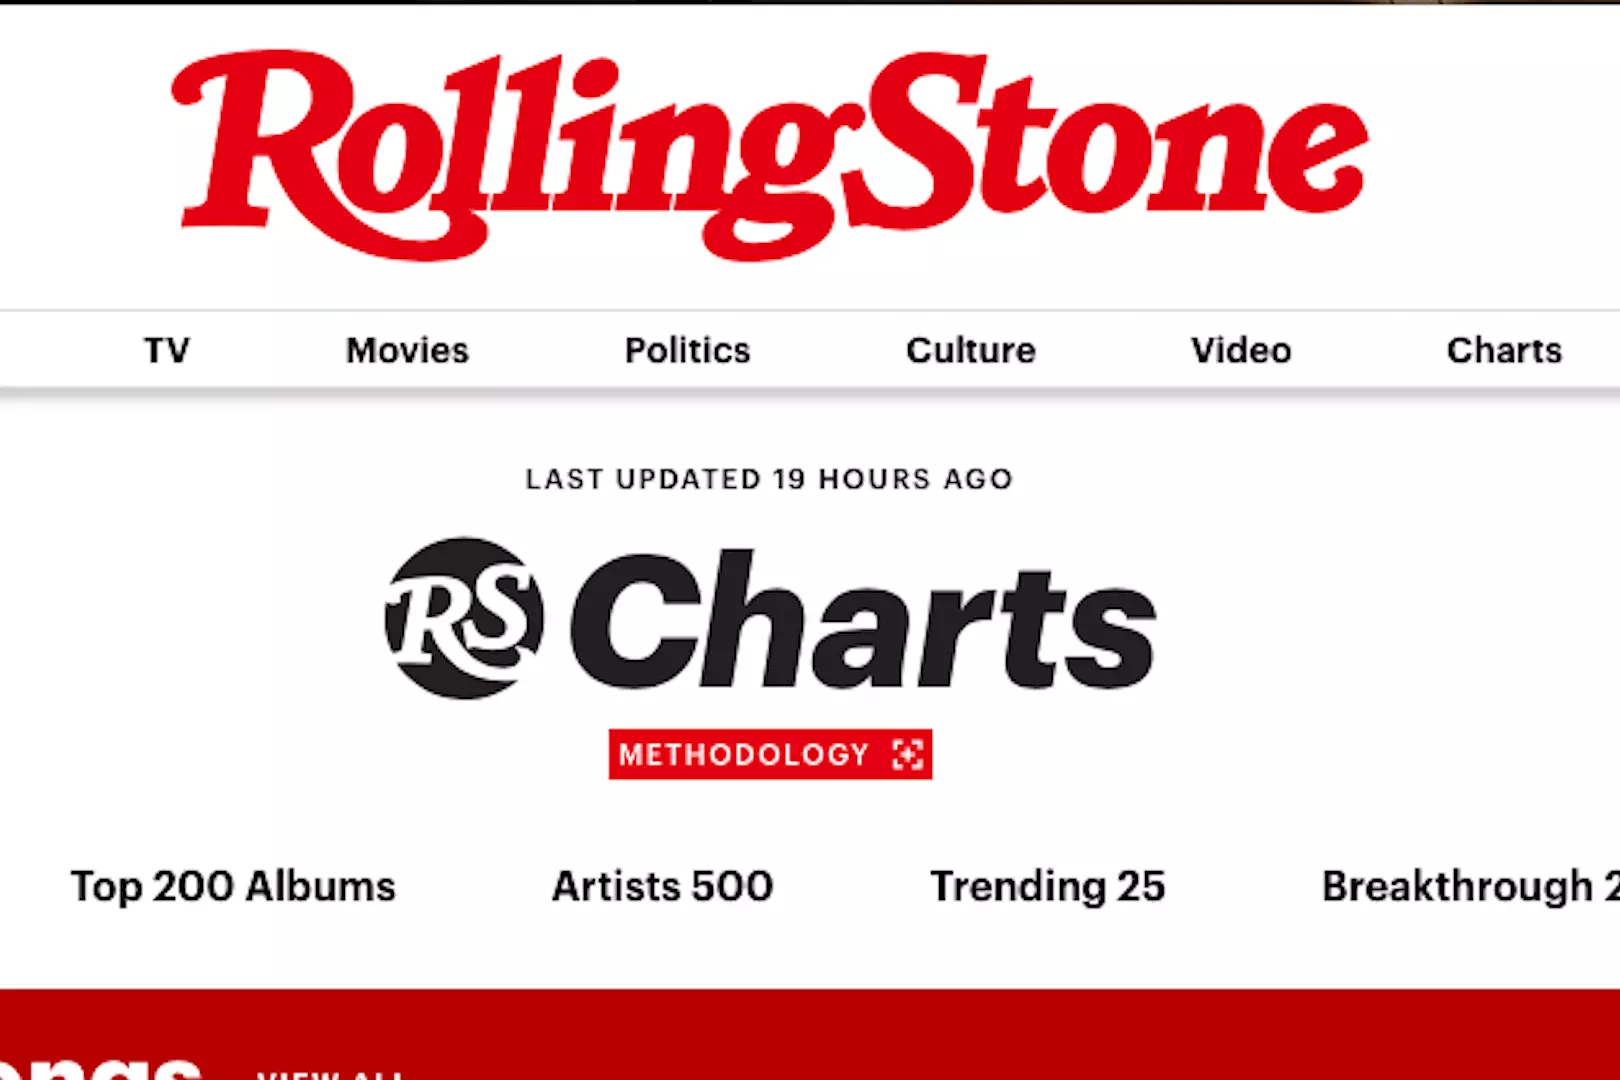 College Radio Charts Rolling Stone